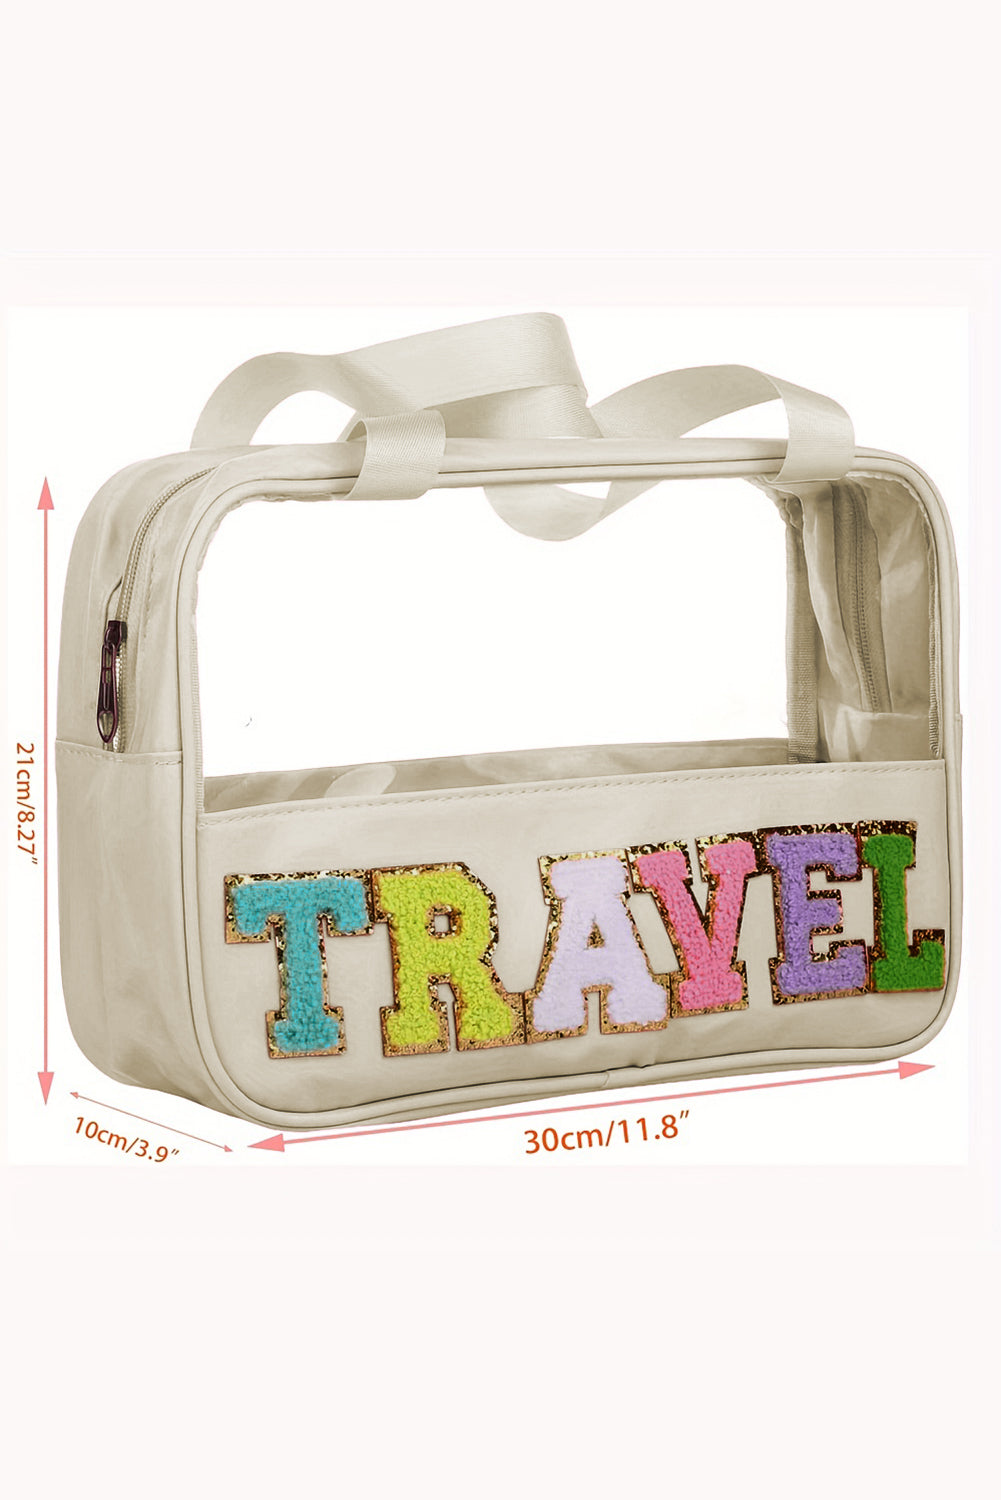 Parchment TRAVEL Transparent Pouch with Zip Bag - Secure & Stylish